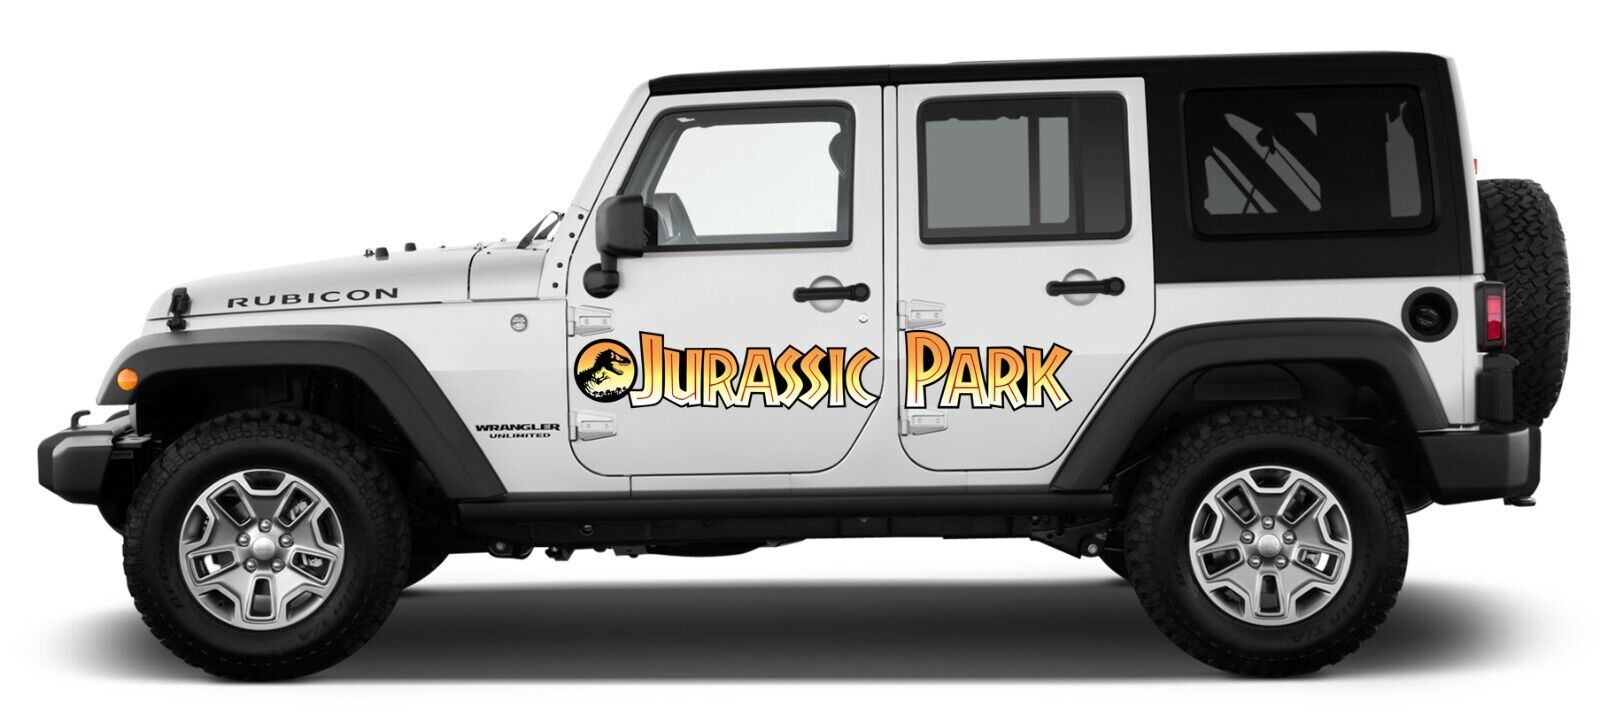 Jurassic Park Explorer Car truck Vinyl Decal Set Graphic High Quality 